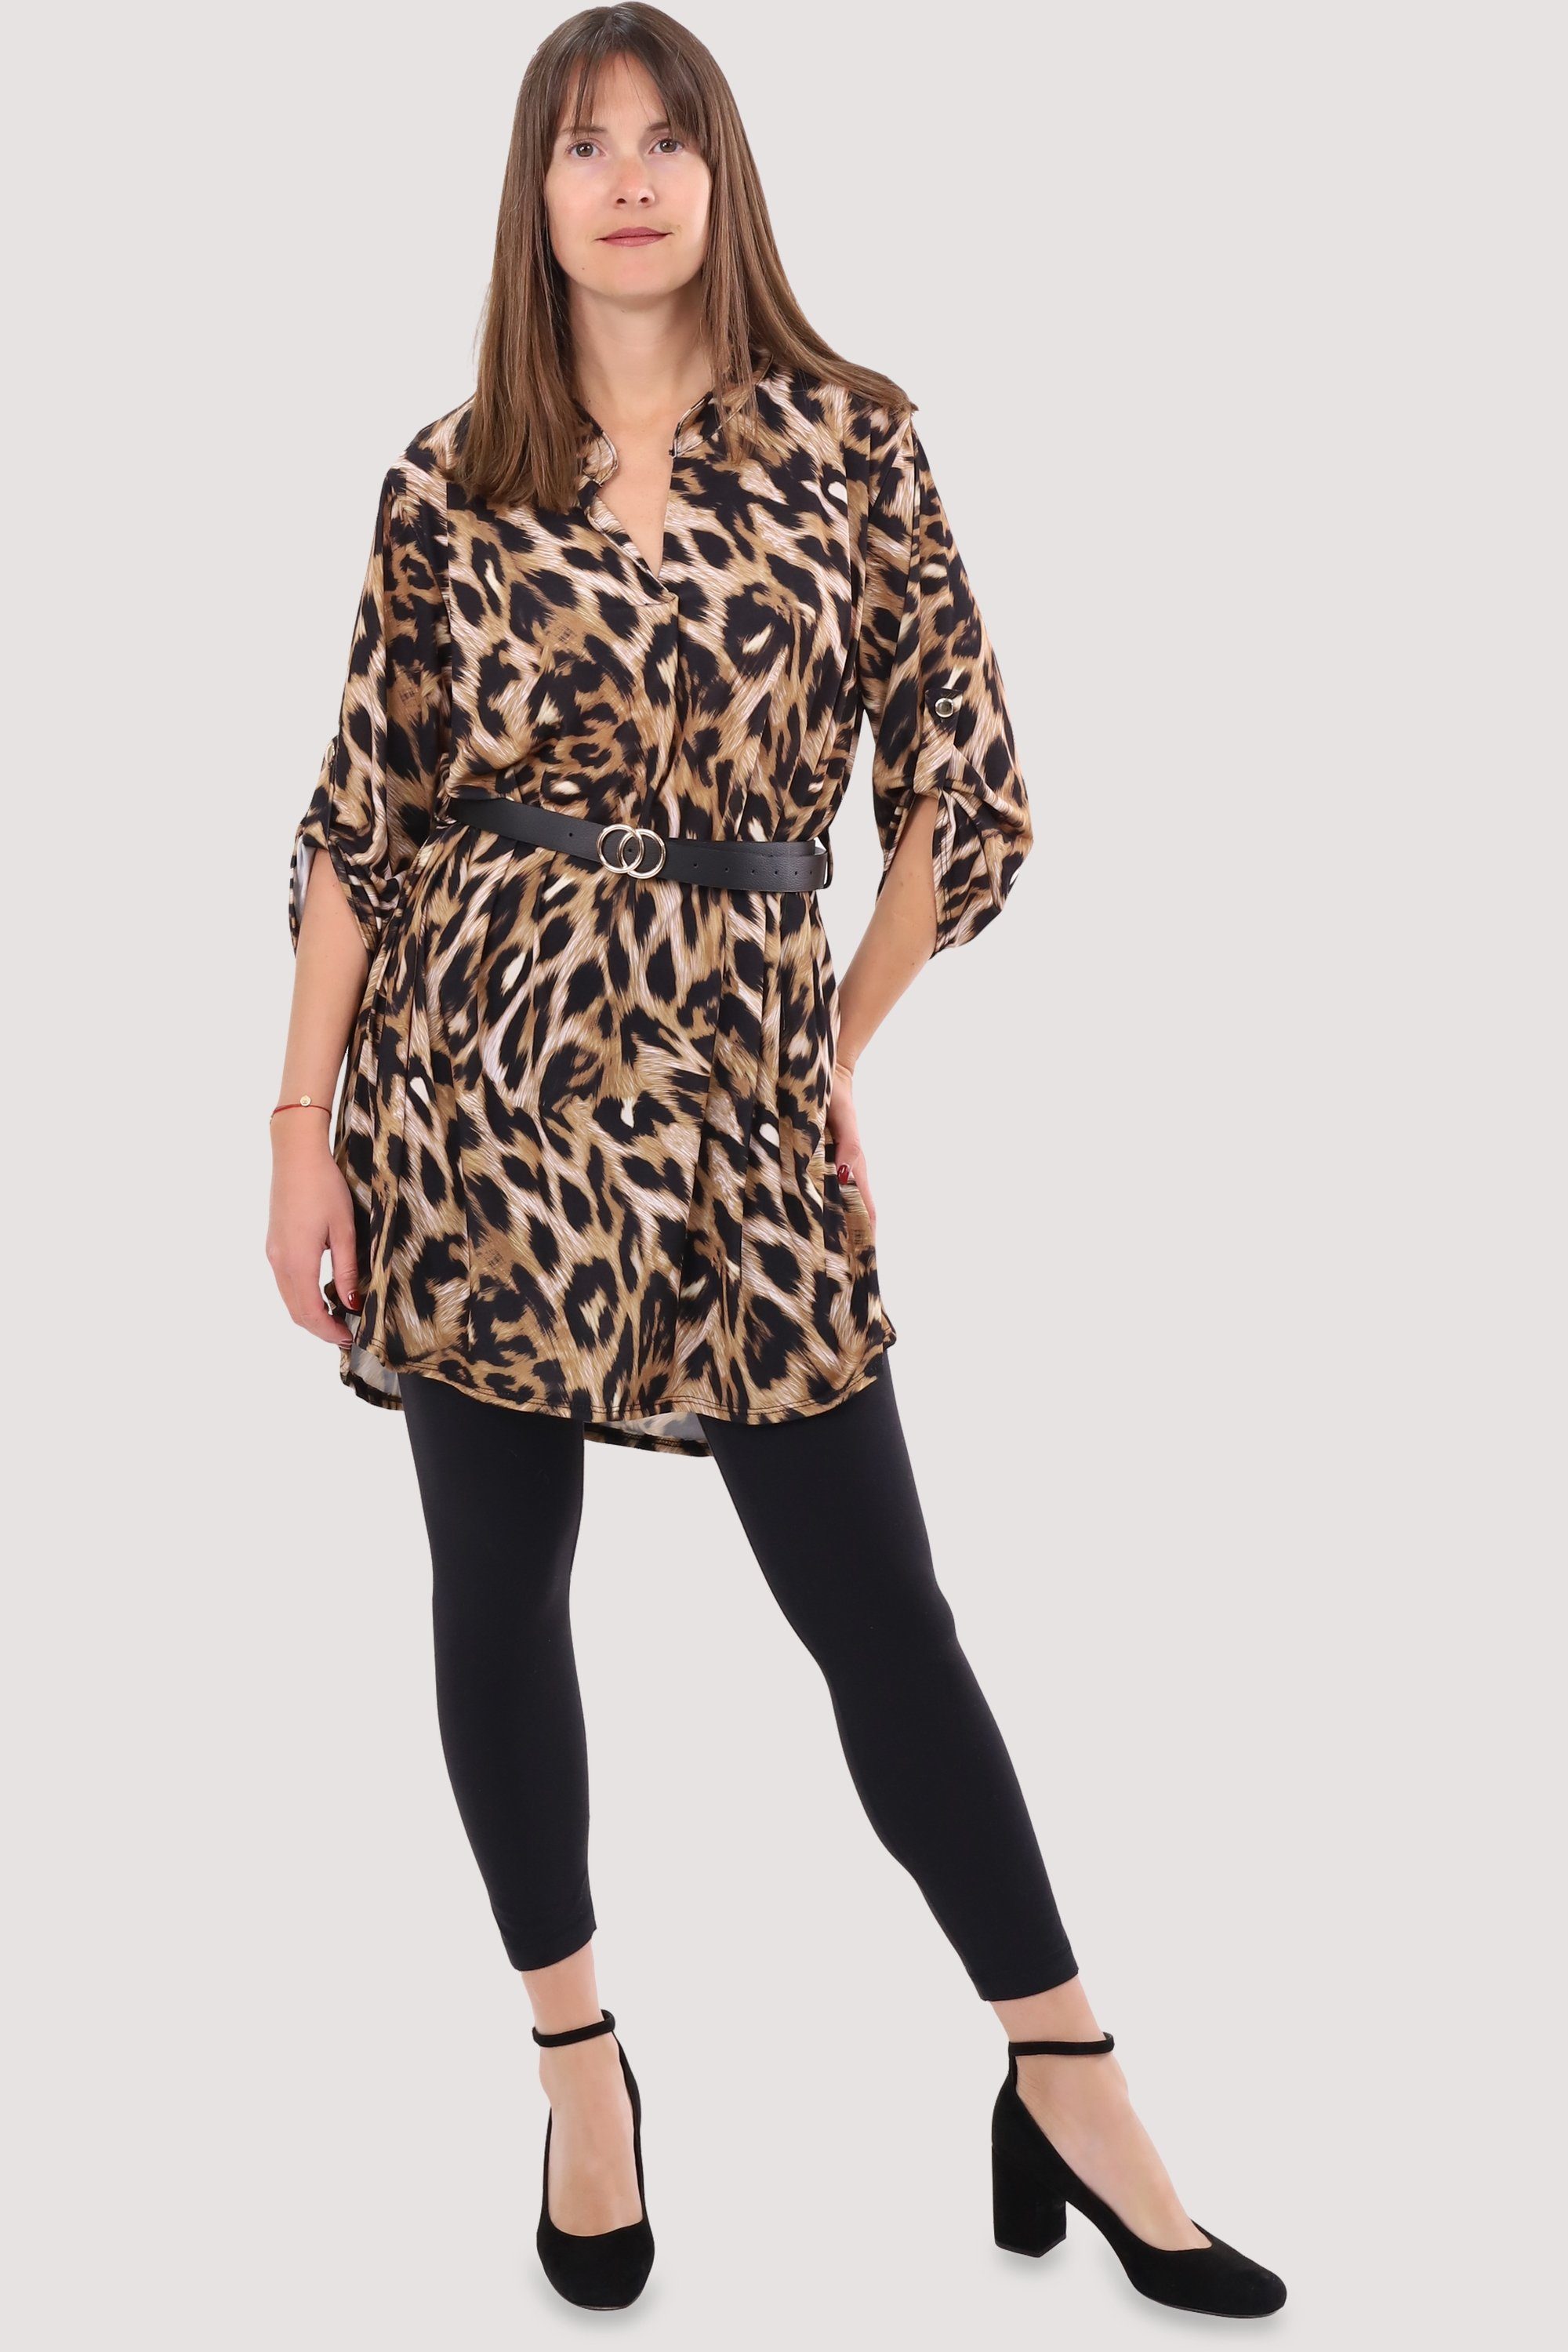 malito more than Animalprint 3 23203 Tunika fashion Gürtel Kleid Bluse Einheitsgröße Gepard mit Druckkleid